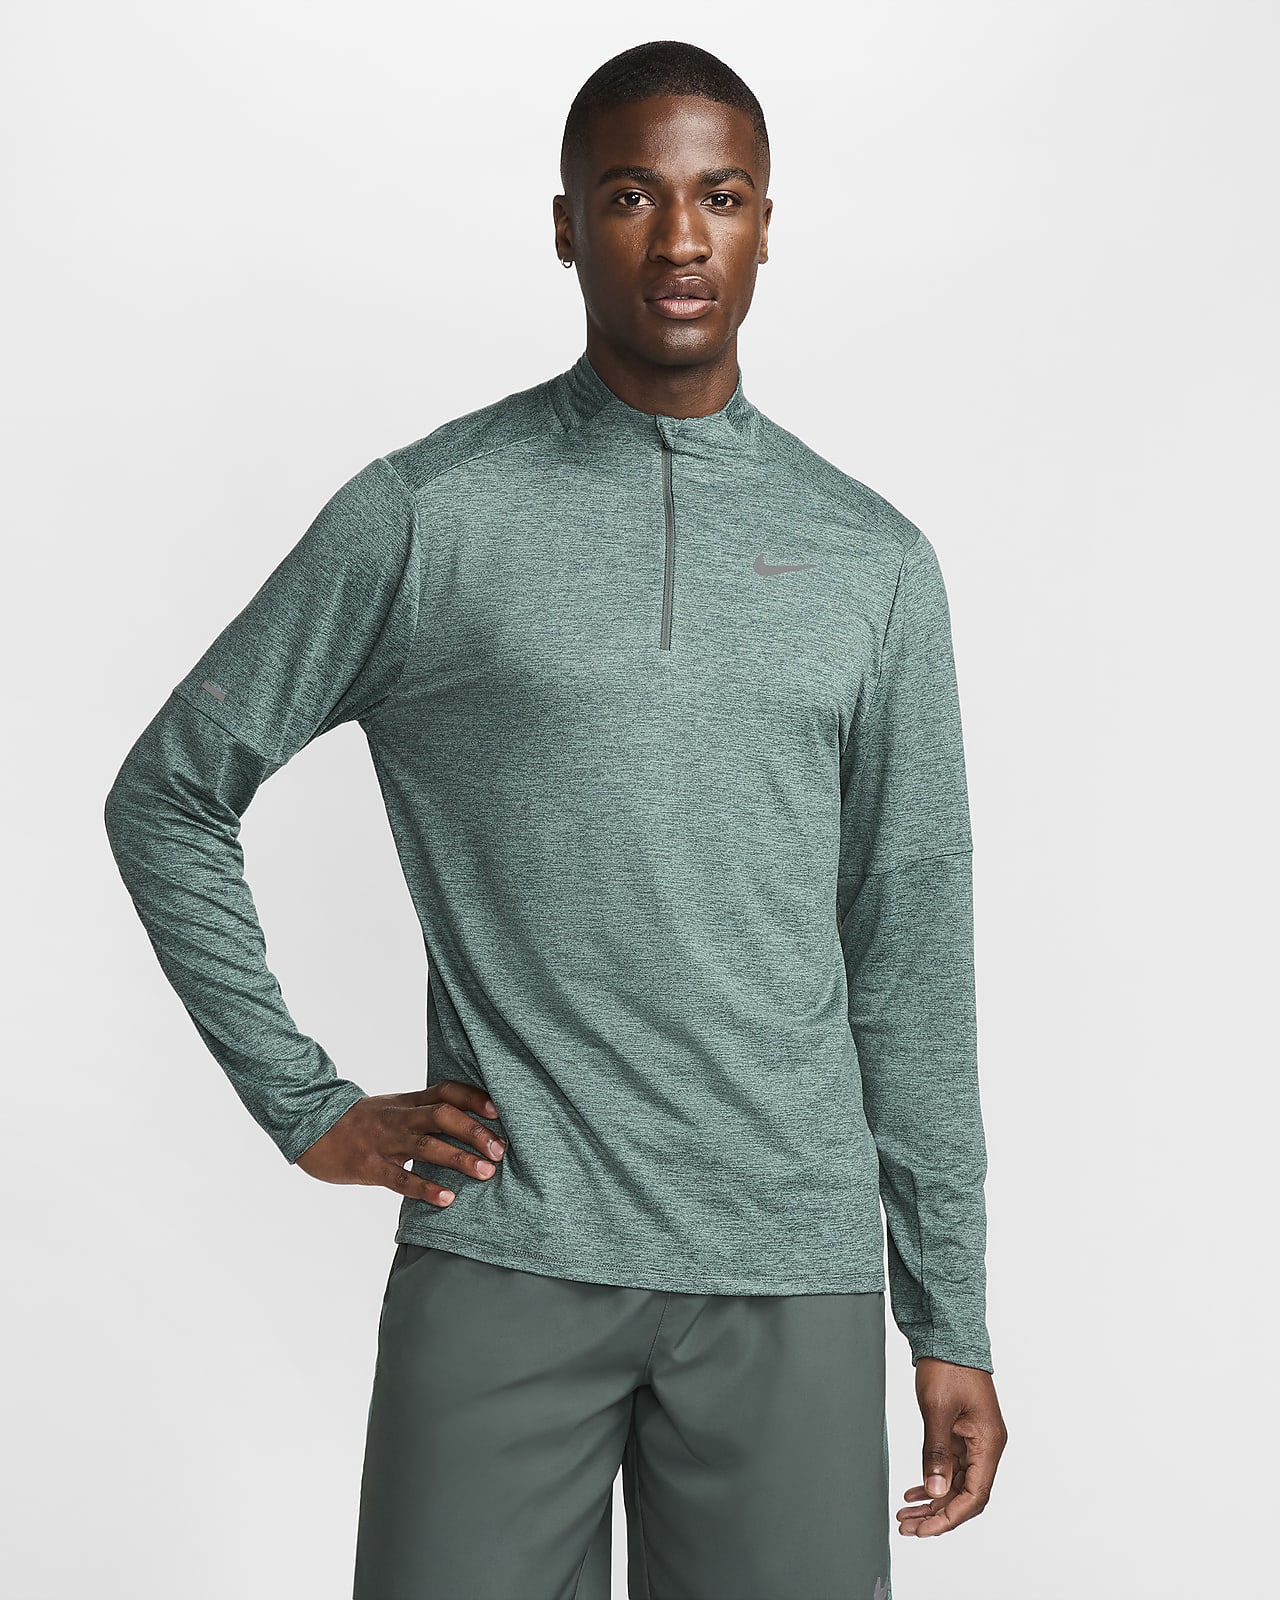 Nike Dri-FIT rövid cipzáras férfi futófelső